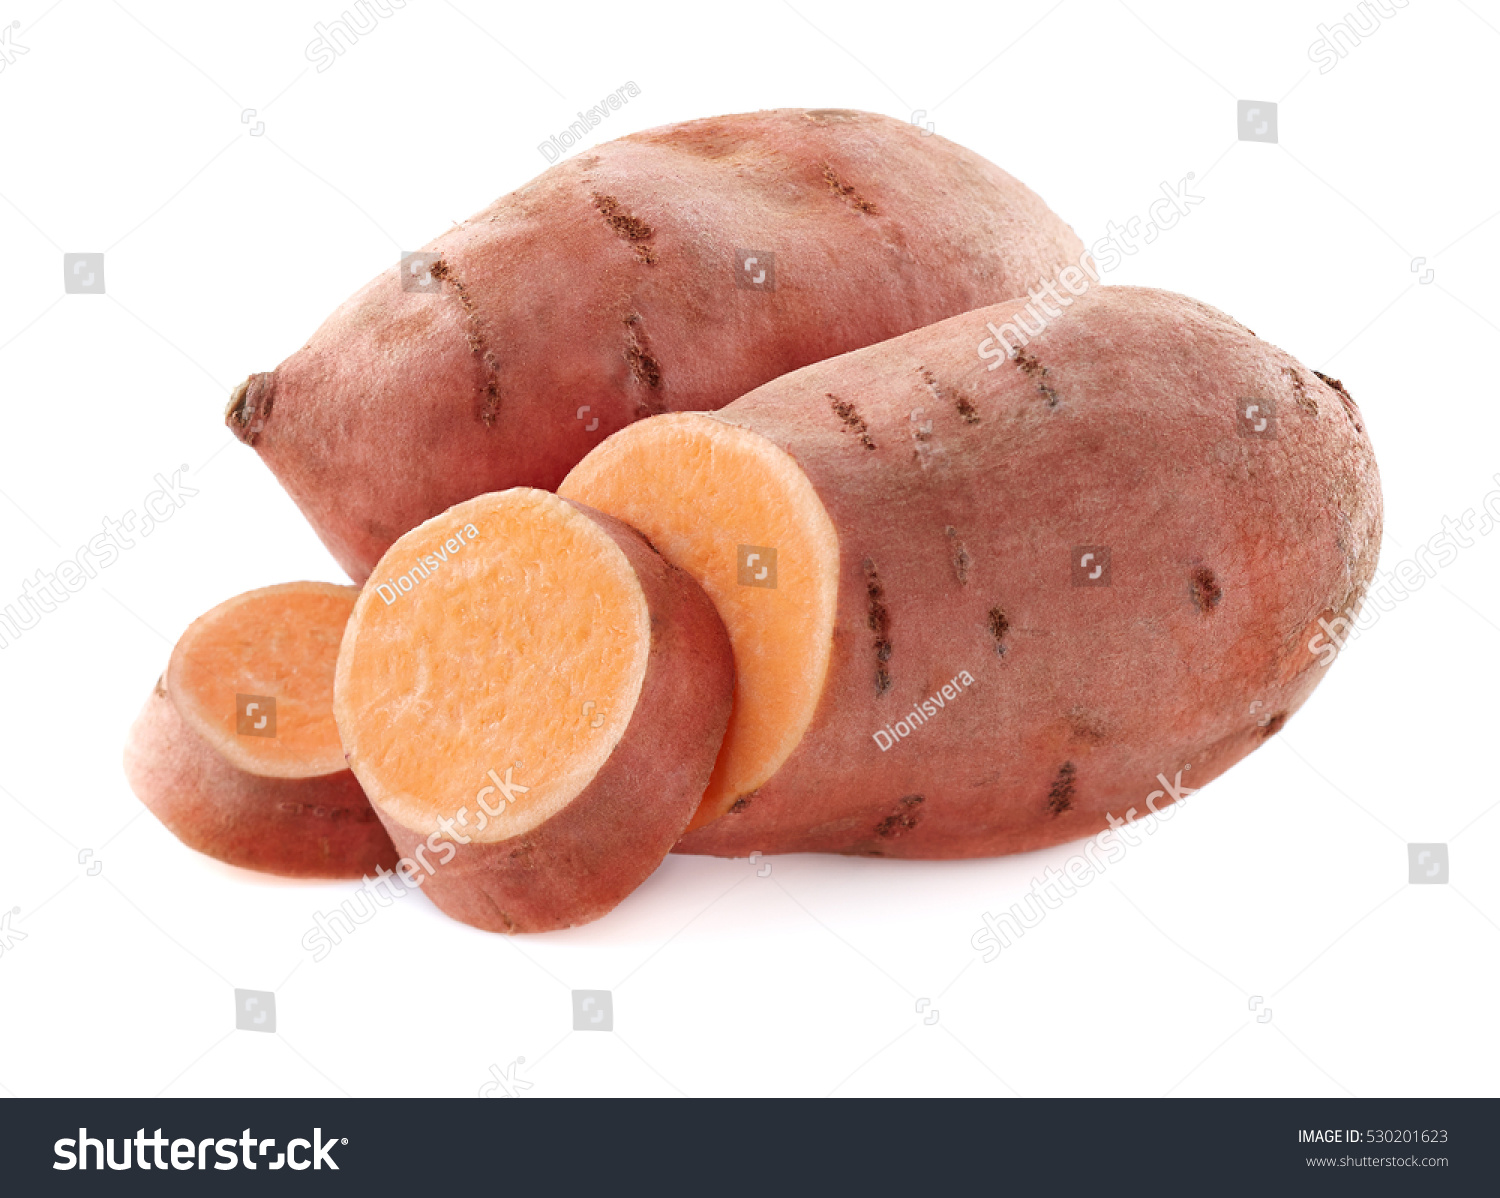 Sweet potato in closeup on a white background #530201623